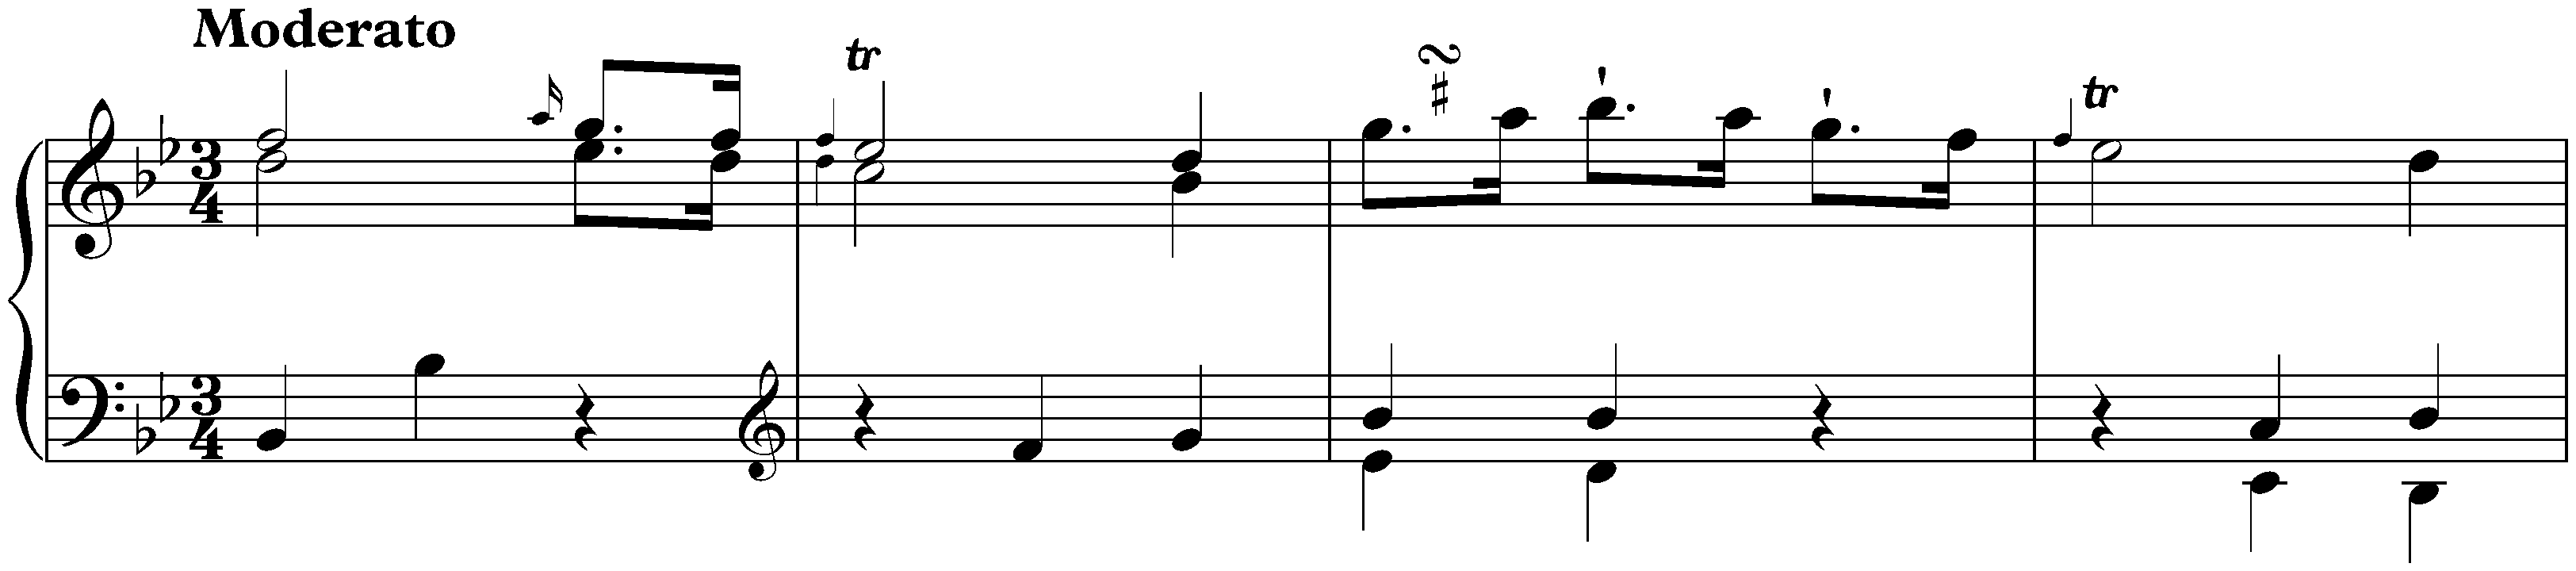 Sonata in B-flat major, Hob. XVI:18; 2. Moderato